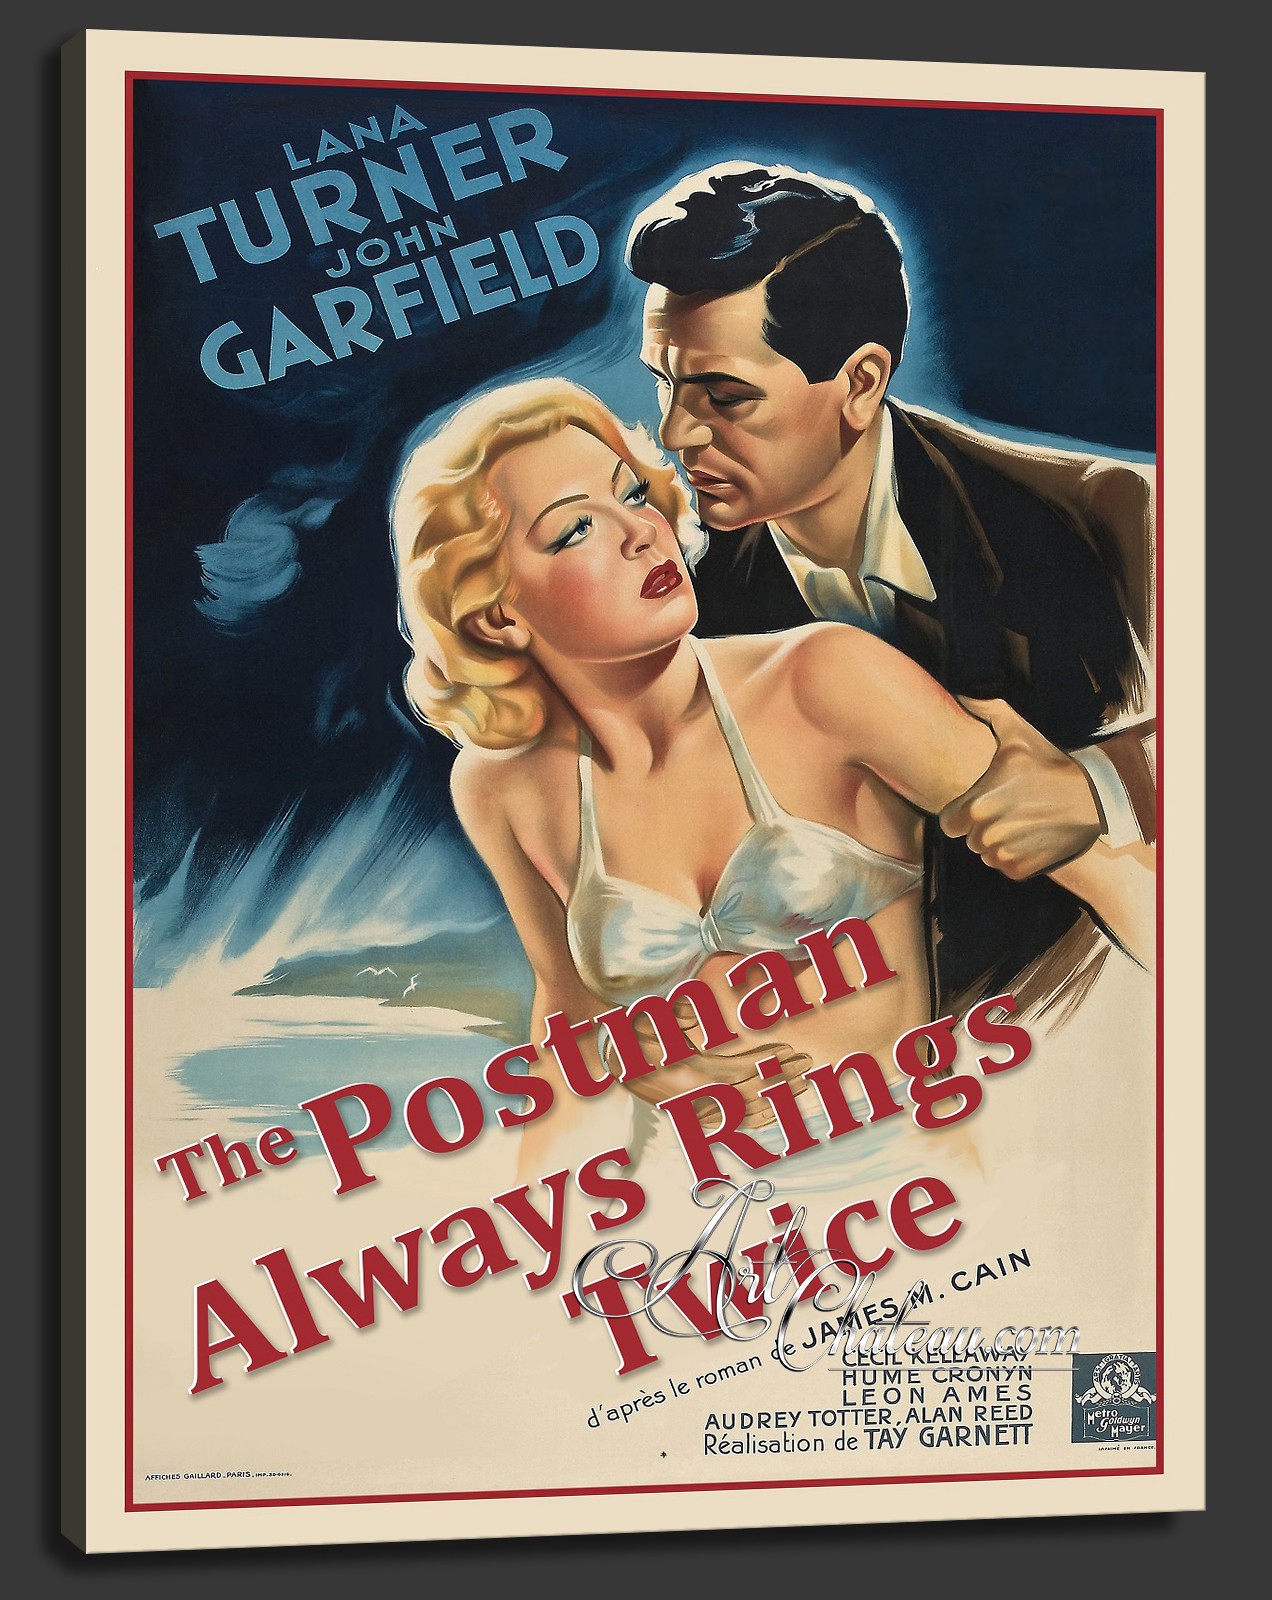 Vintage Style Movie Poster, The Postman Always Rings Twice